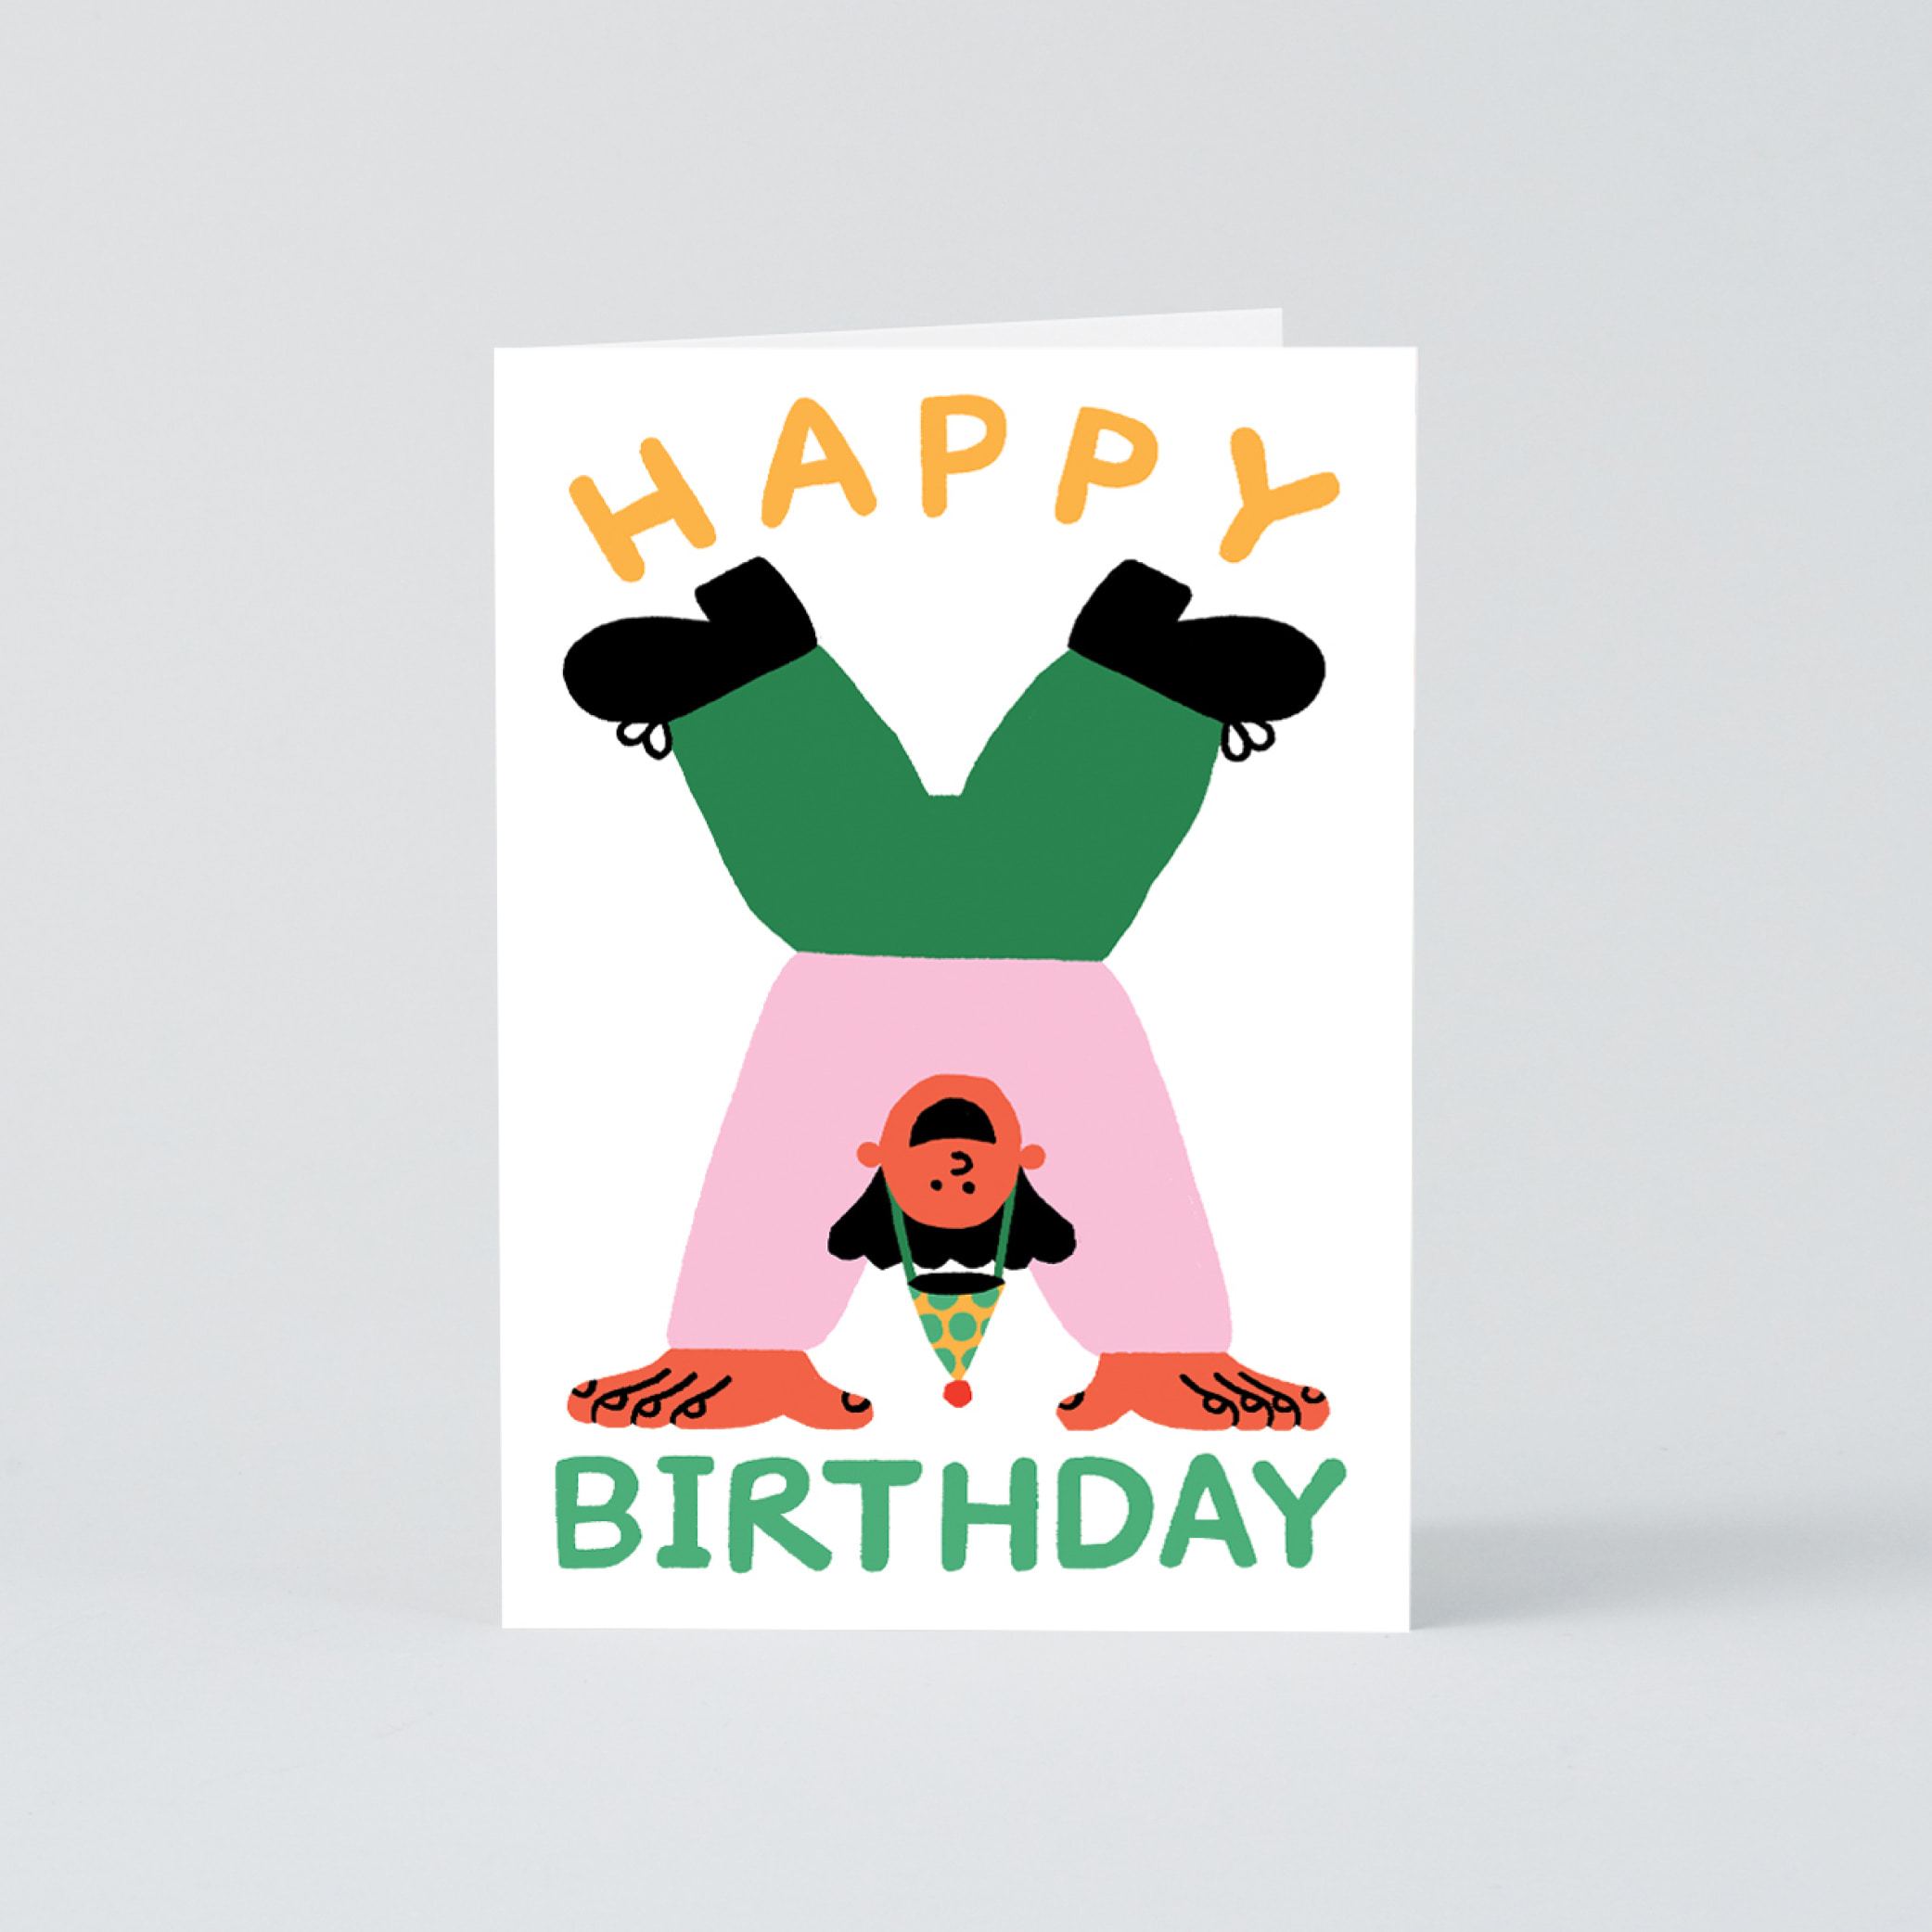 [WRAP] Happy Birthday Handstand Card